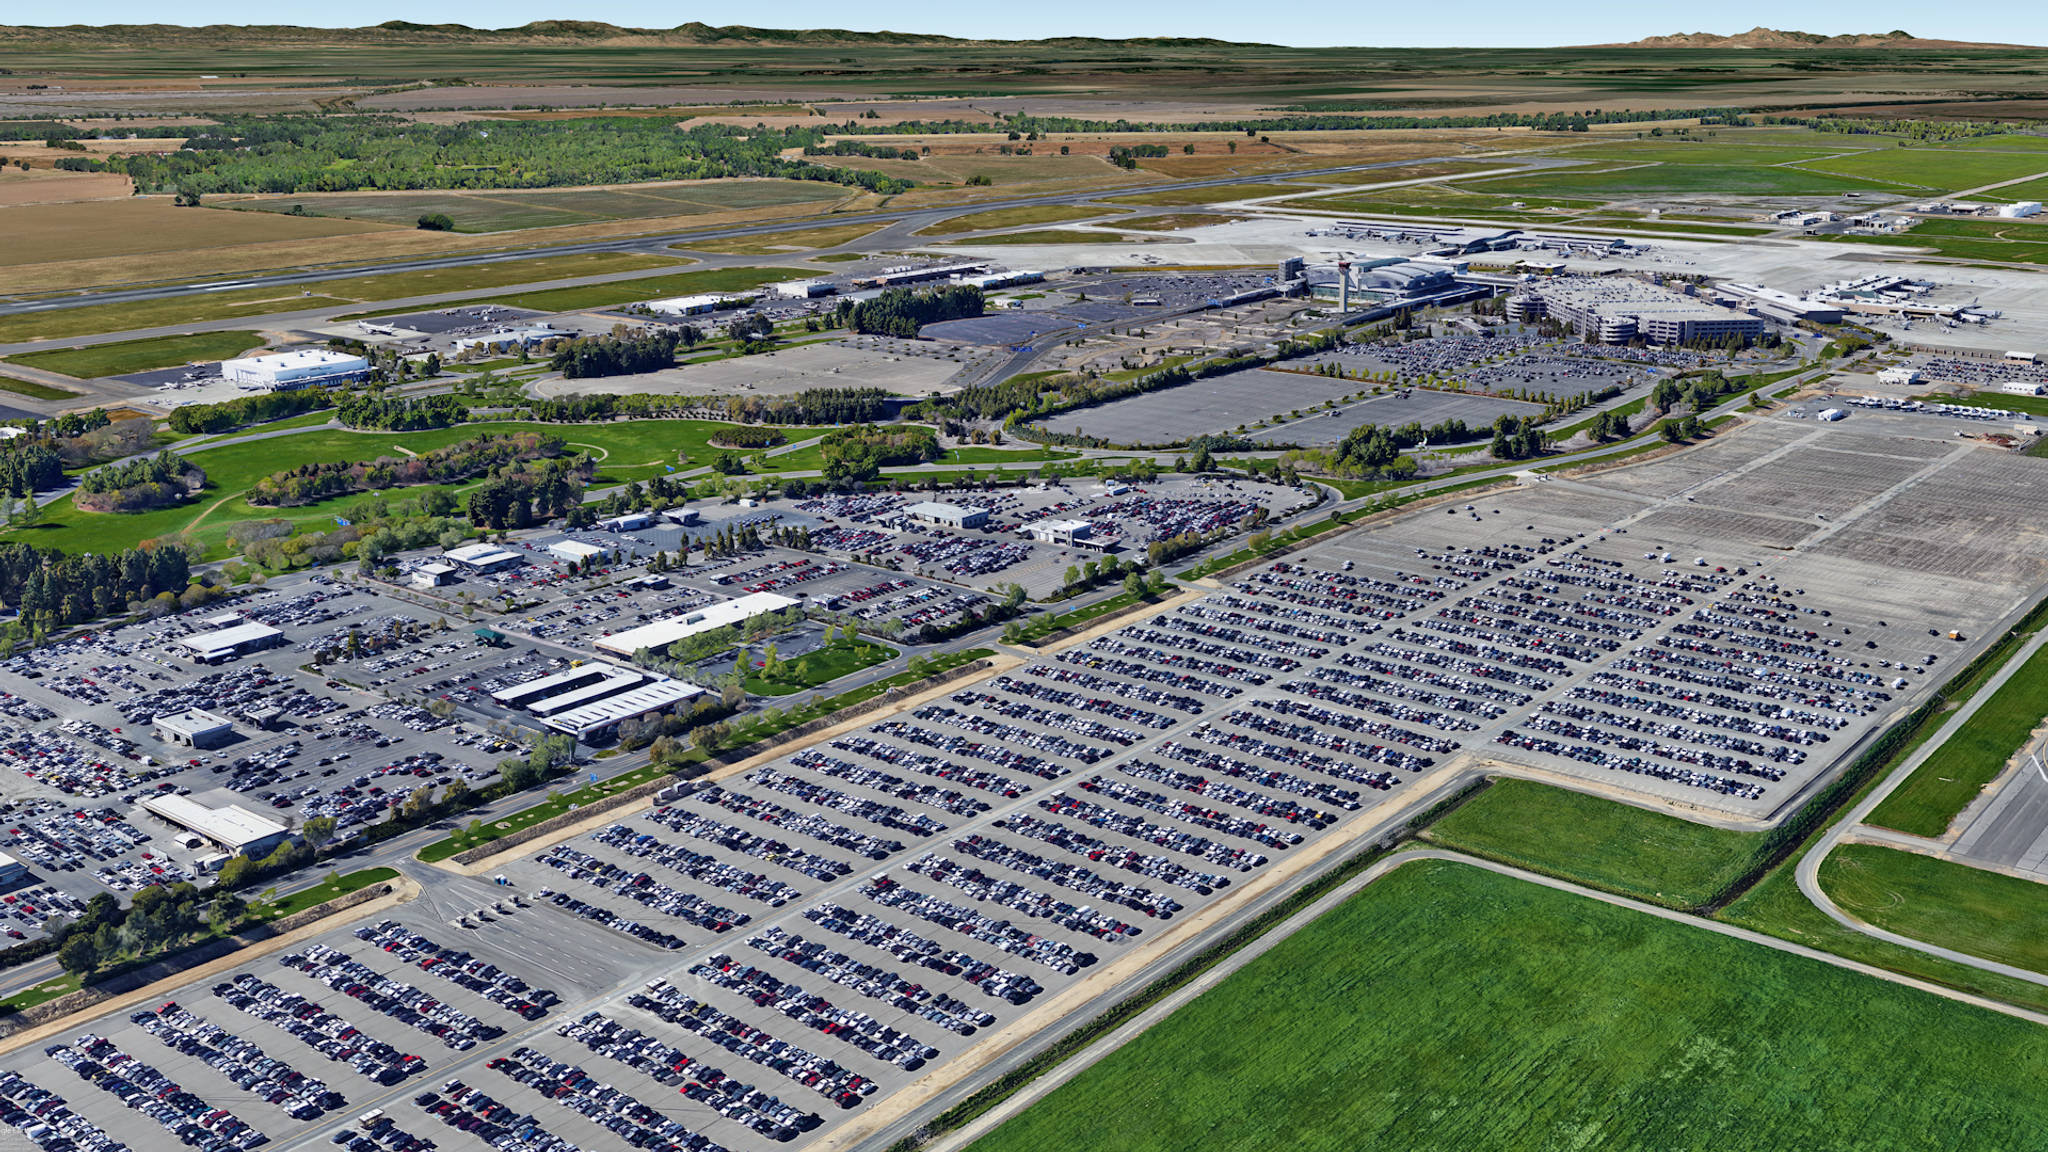  Aerial View of Sacramento Airport Parking